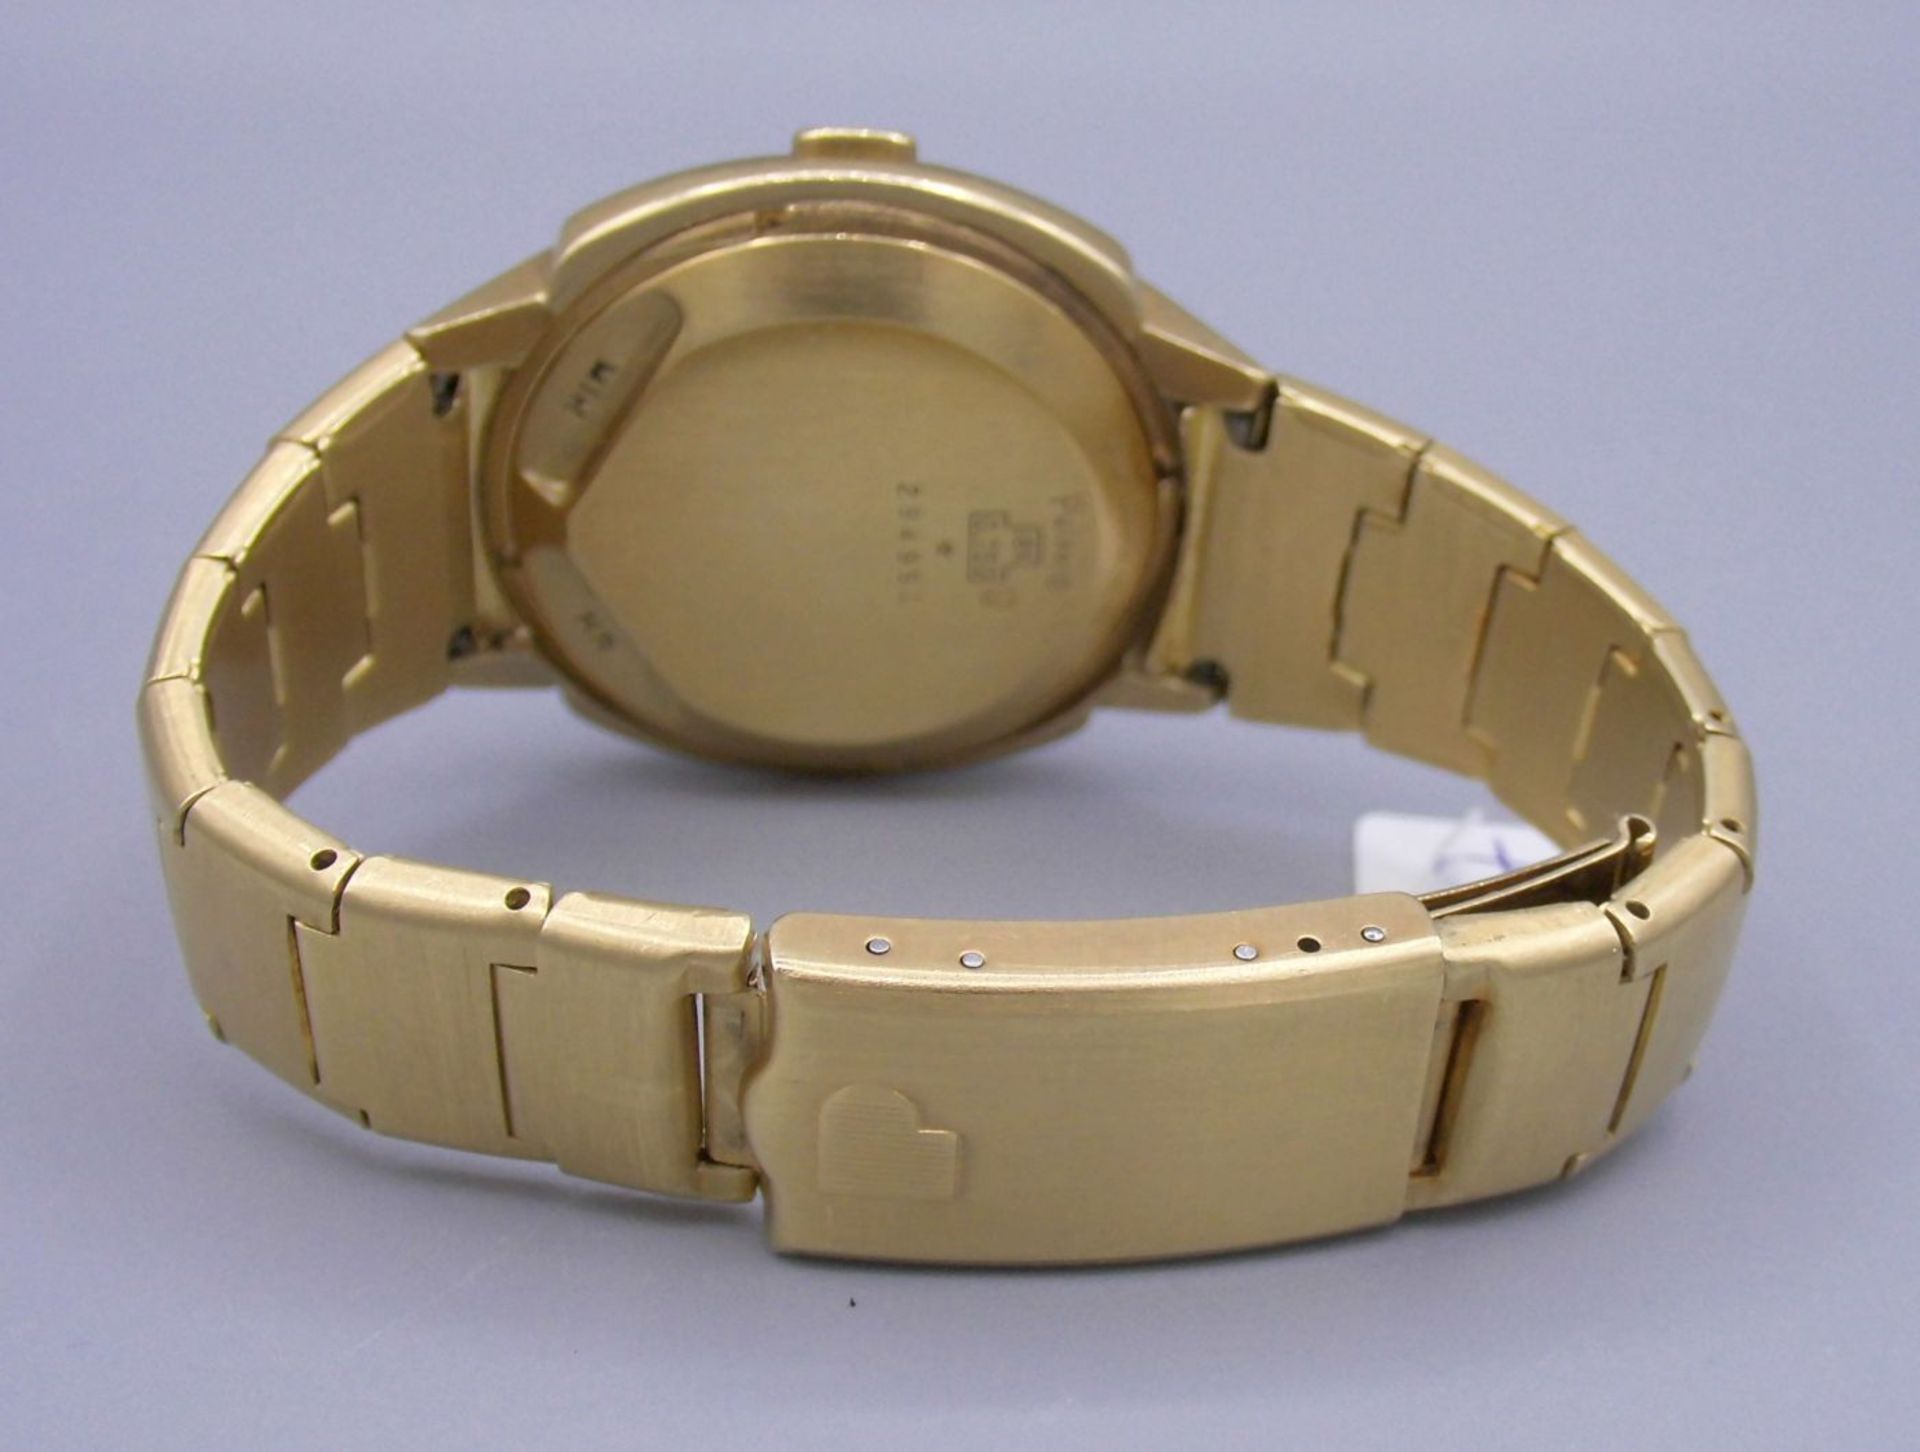 GOLDENE ARMBANDUHR / DIGITALUHR : Pulsar P3 "Date Command" / digital watch, 1970er Jahre, Gehäuse - Bild 4 aus 7